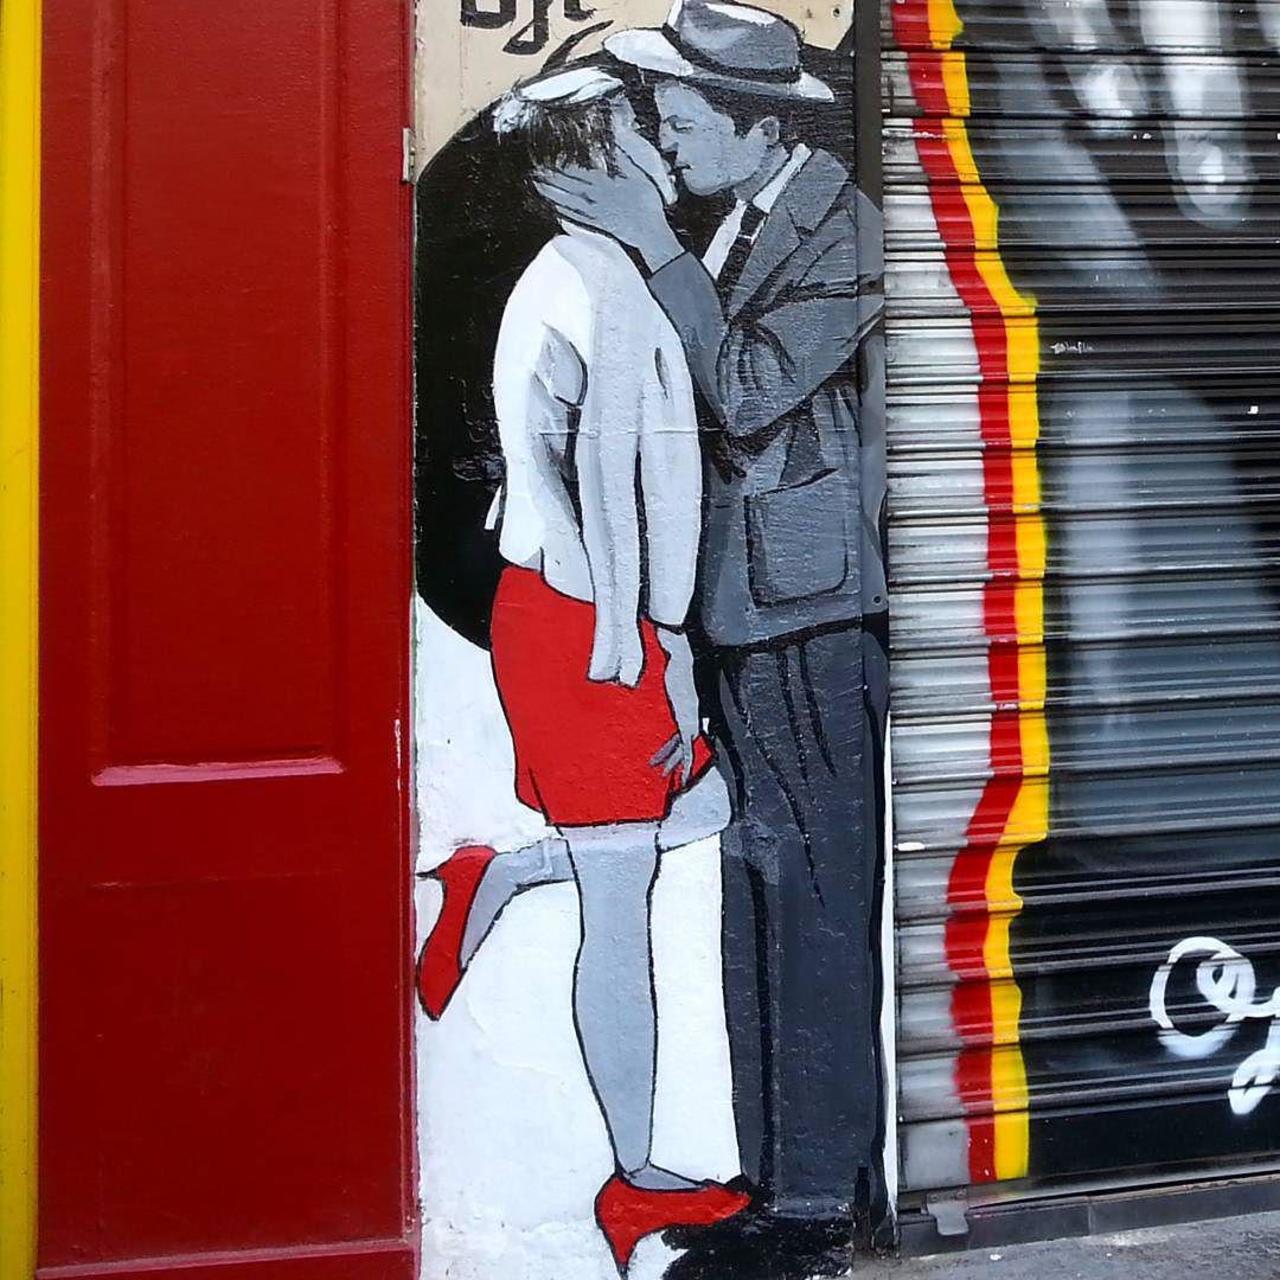 #Paris #graffiti photo by @fotoflaneuse http://ift.tt/1ZP6EIf #StreetArt https://t.co/uA3THjKYKm